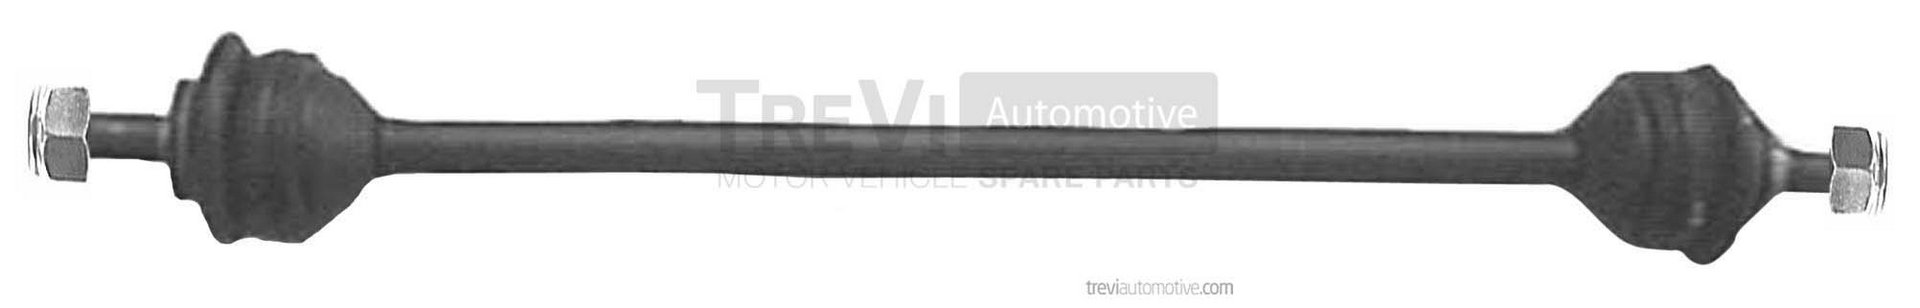 TREVI AUTOMOTIVE TRTT1717